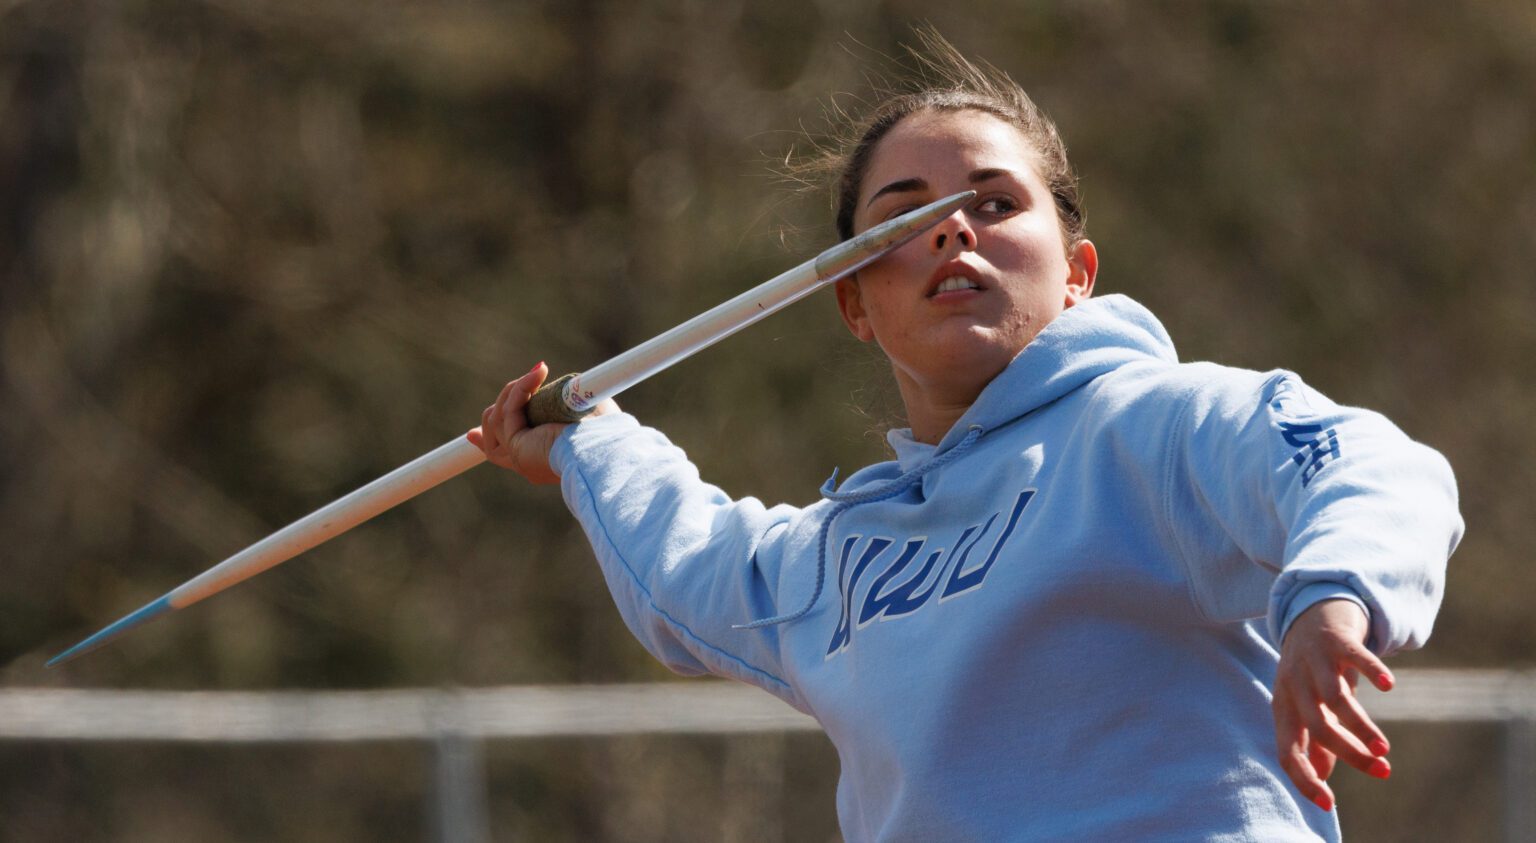 Western Washington University’s Amanda Short throws the javelin during warmups before a meet at Civic Stadium on April 2.